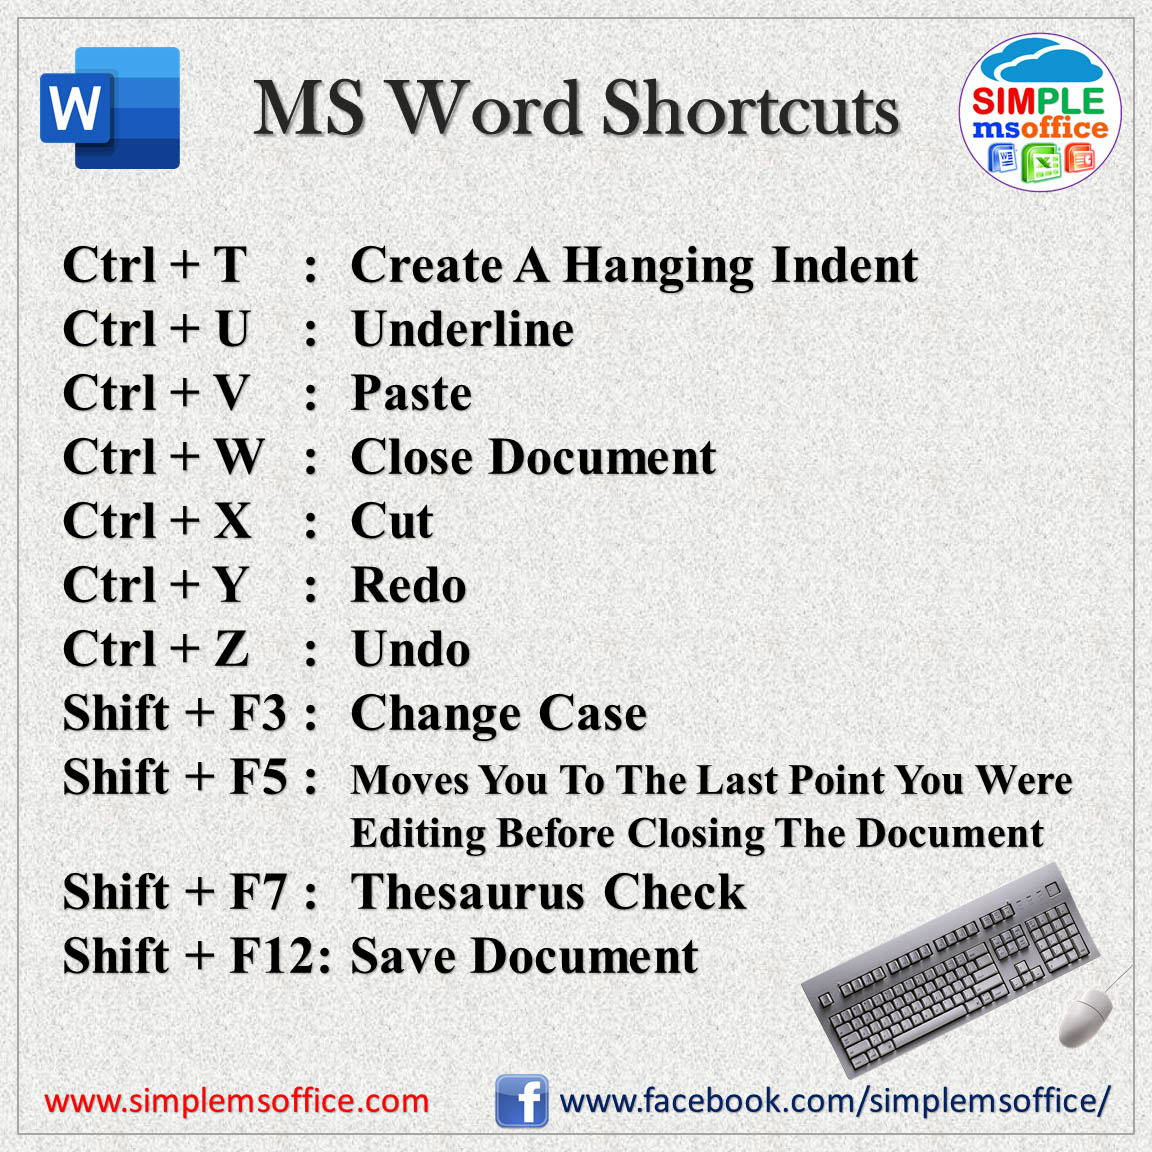 ms-word-shortcuts-06-simplemsoffice